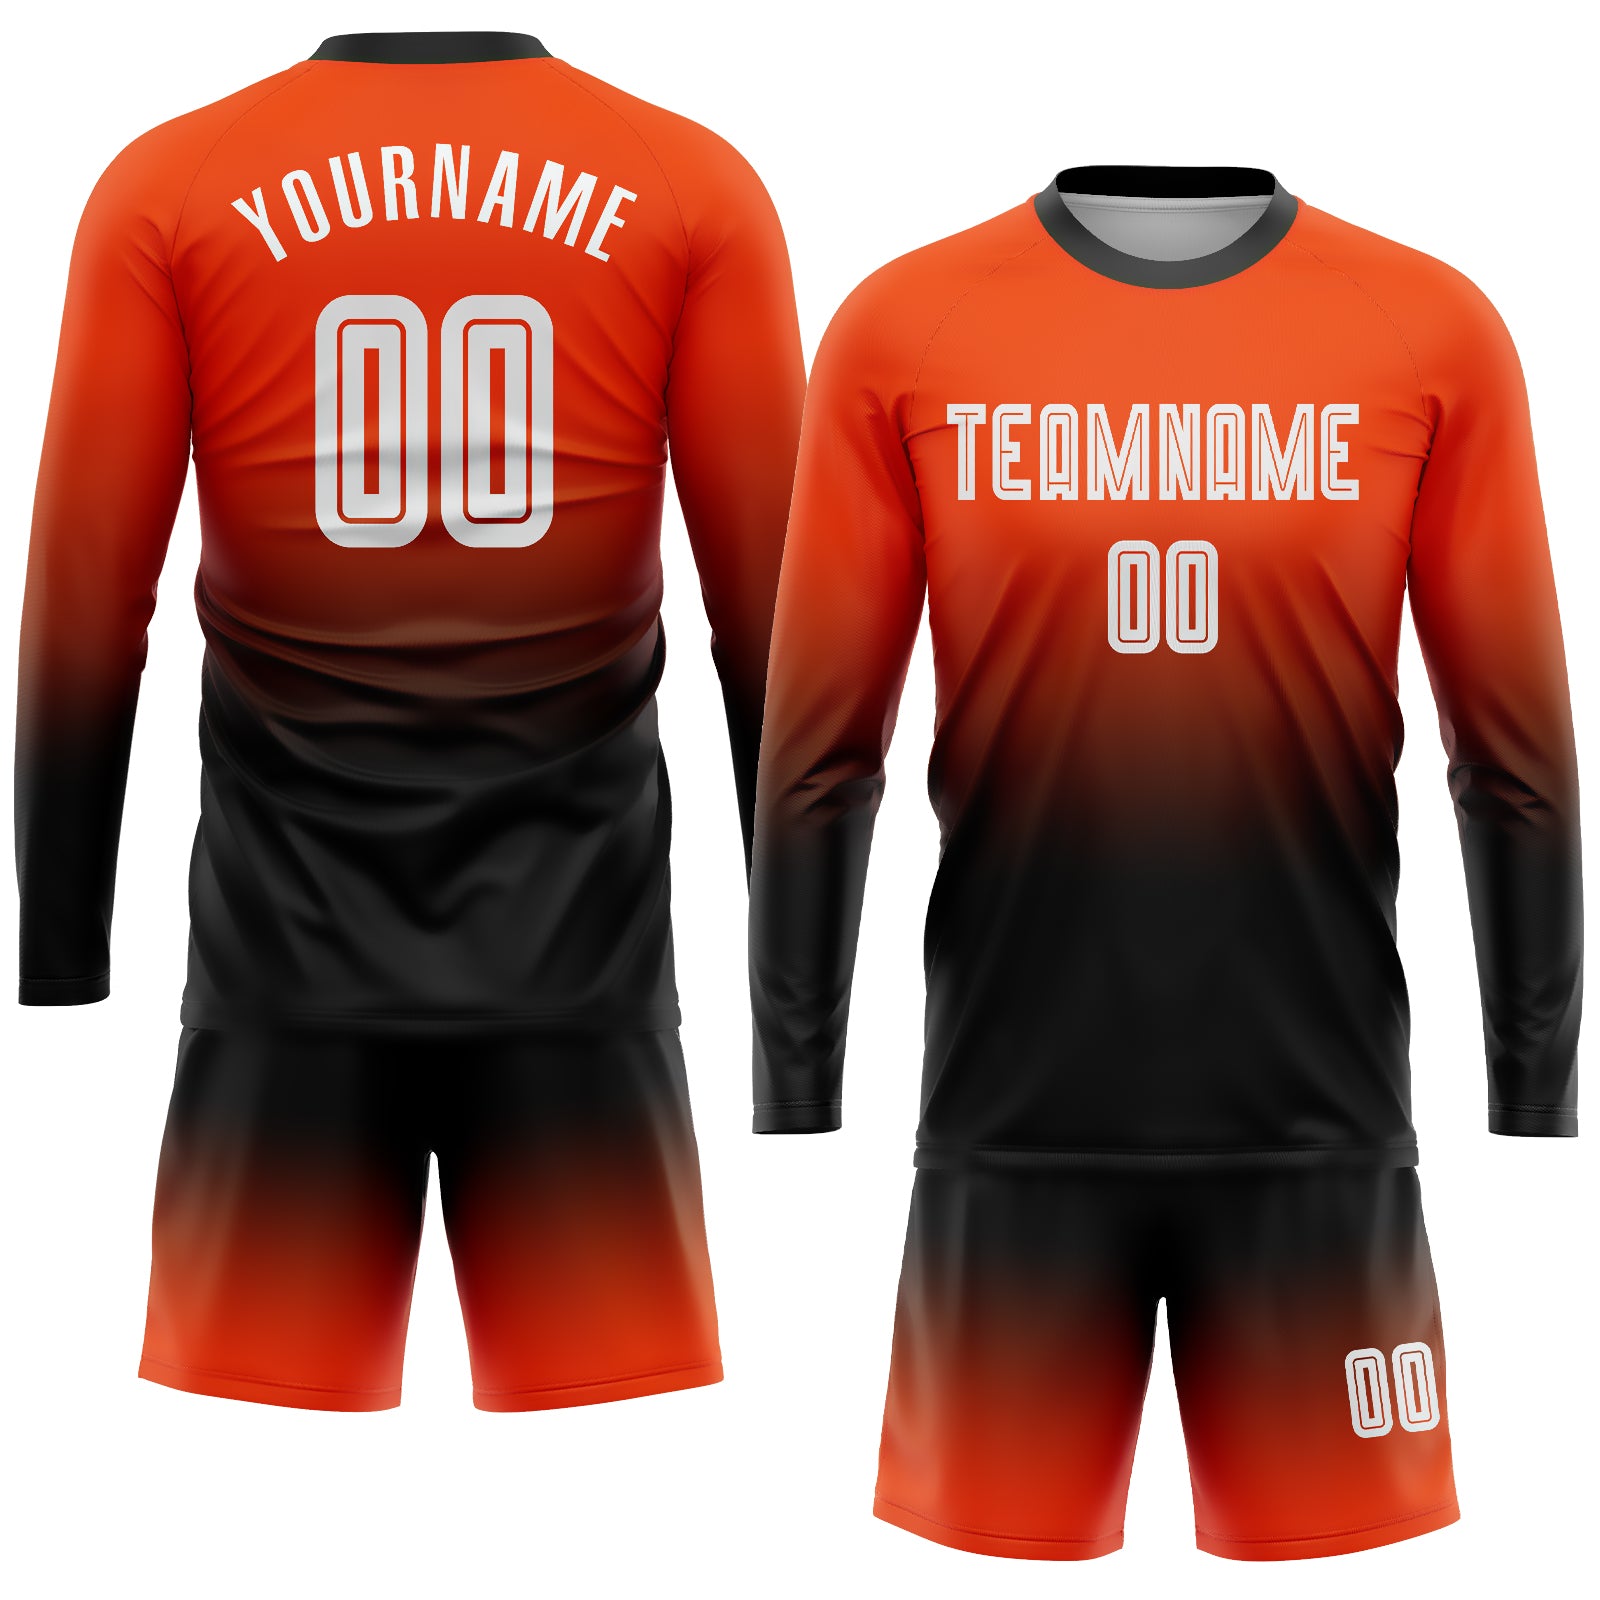 FANSIDEA Custom Orange White-Black Sublimation Long Sleeve Fade Fashion Soccer Uniform Jersey Men's Size:3XL